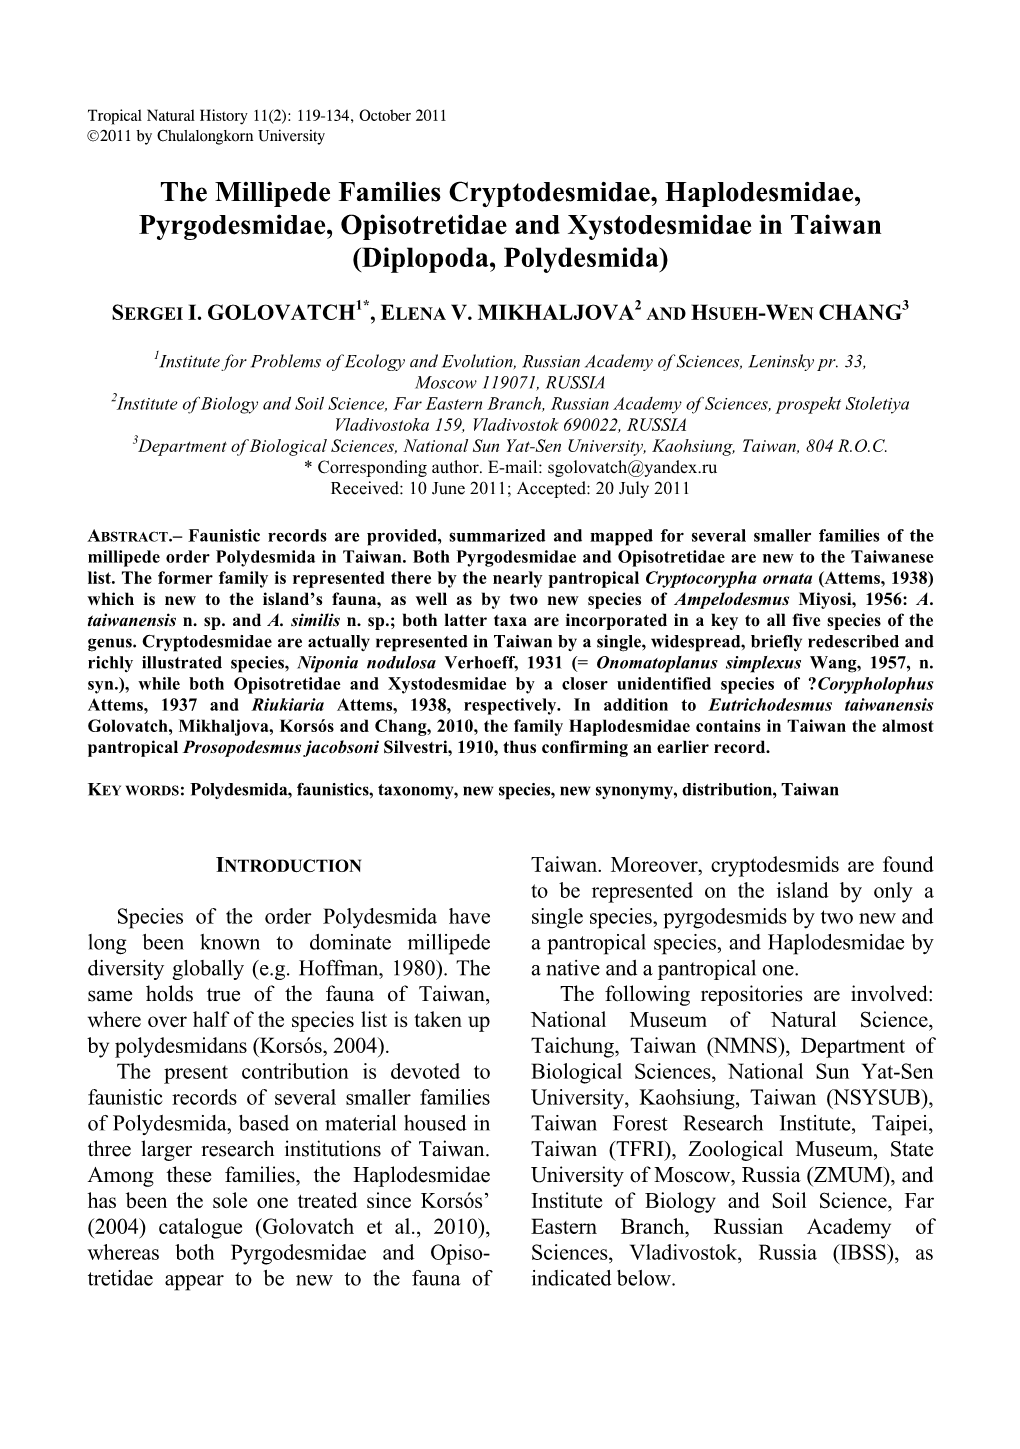 The Millipede Families Cryptodesmidae, Haplodesmidae, Pyrgodesmidae, Opisotretidae and Xystodesmidae in Taiwan (Diplopoda, Polydesmida)